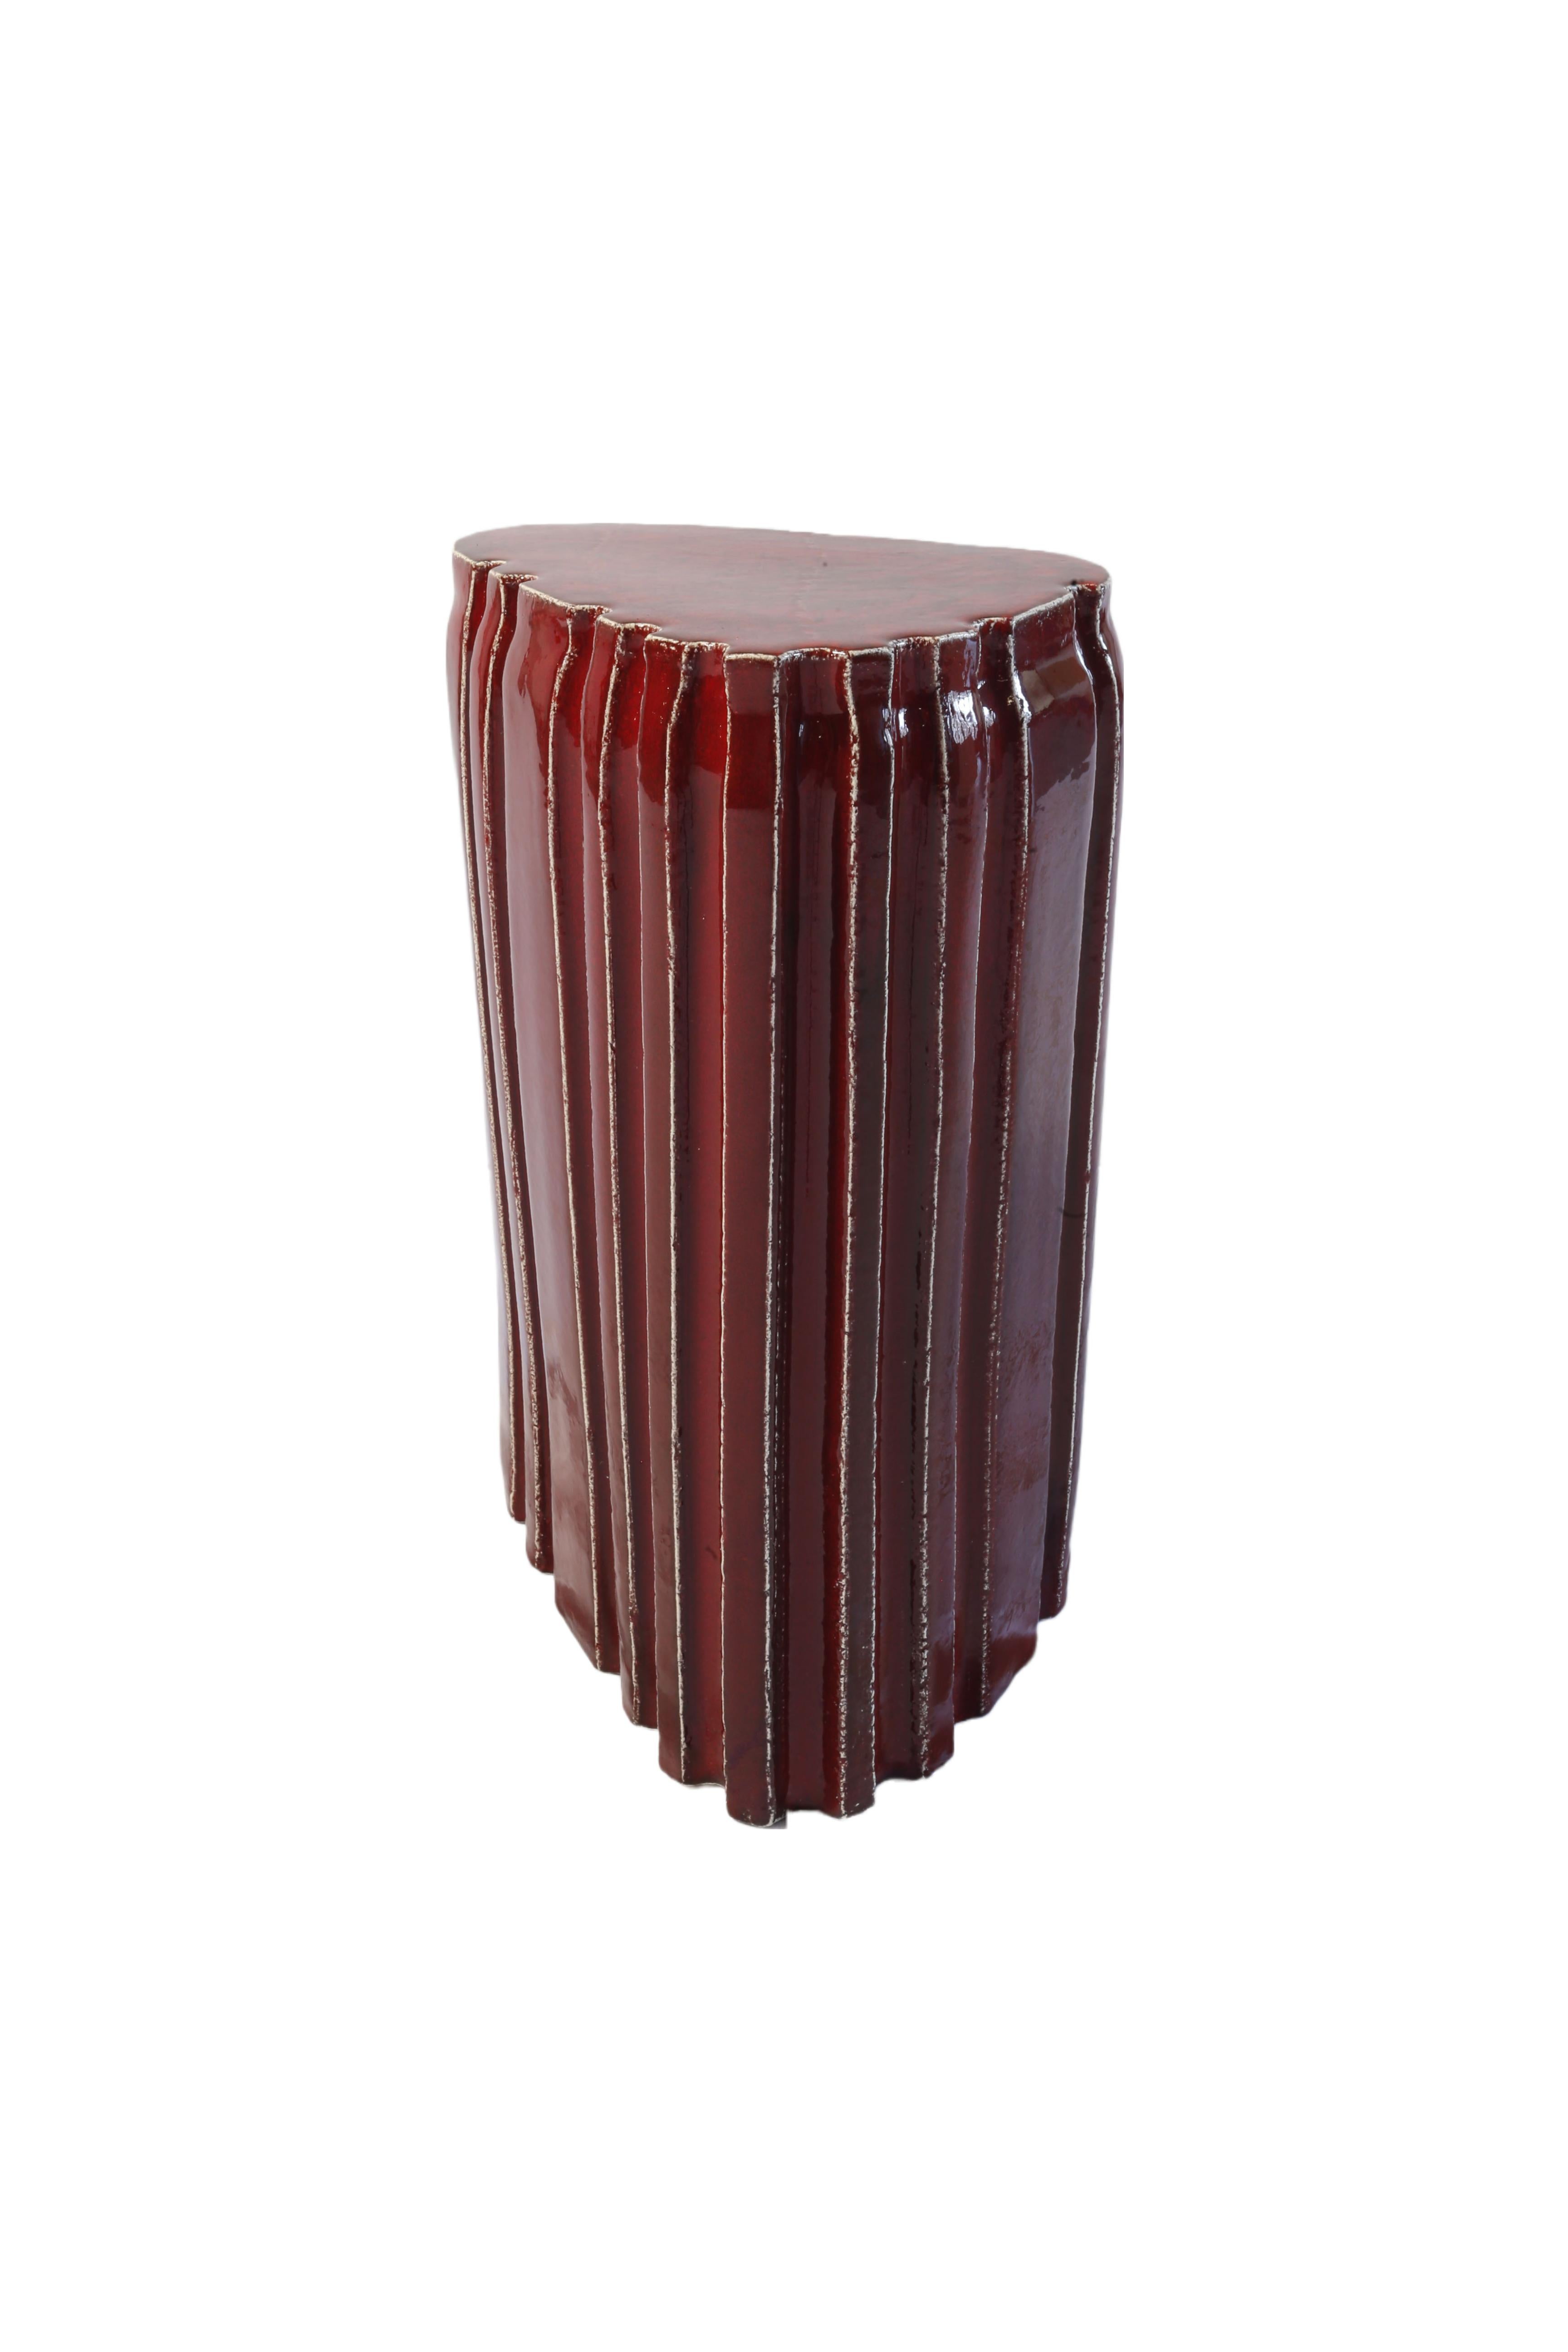 red ceramic stool